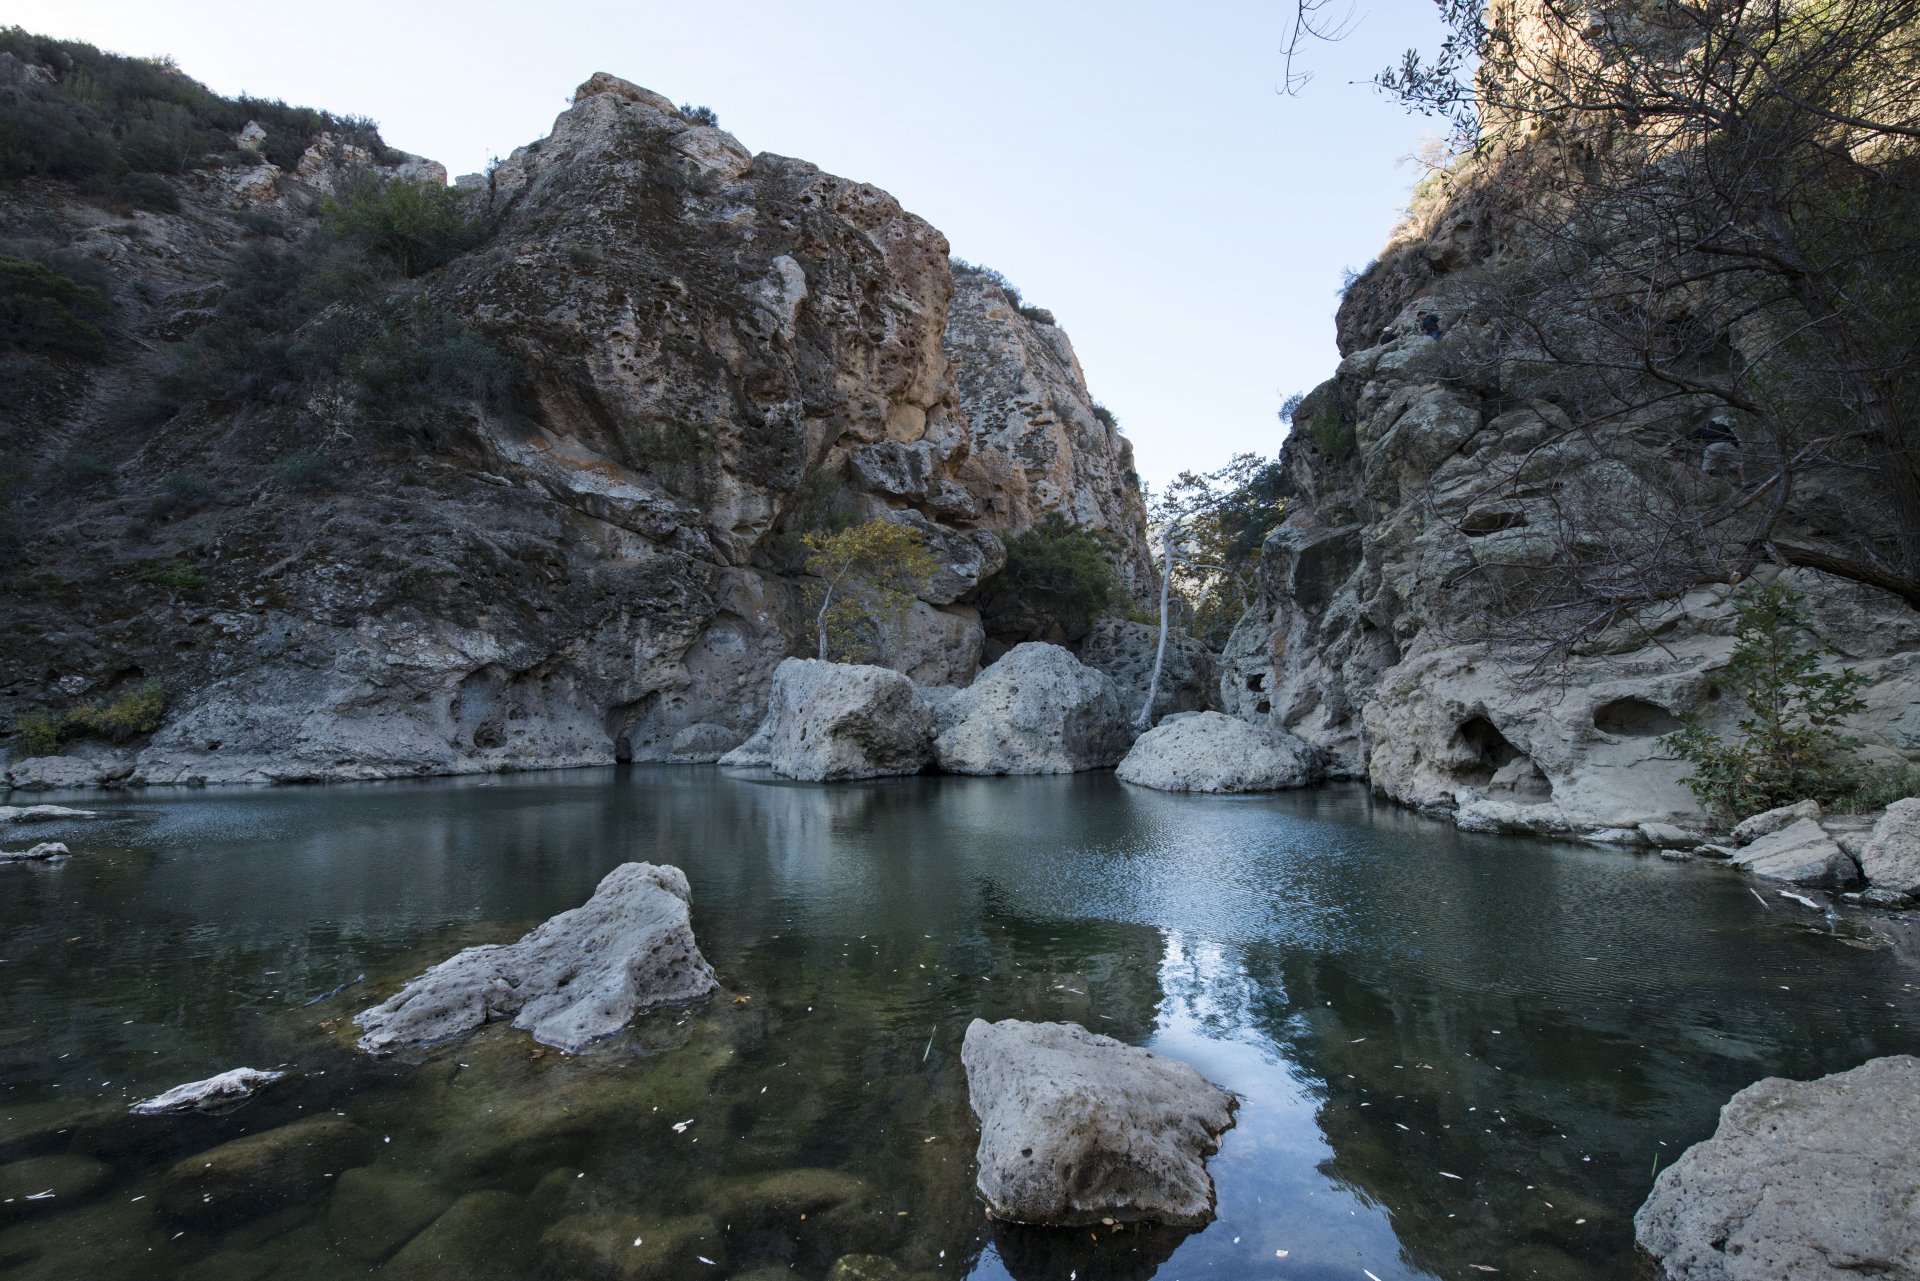 AquaMobile Swim presents Los Angeles' best places to swim: Malibu Creek Rock Pool